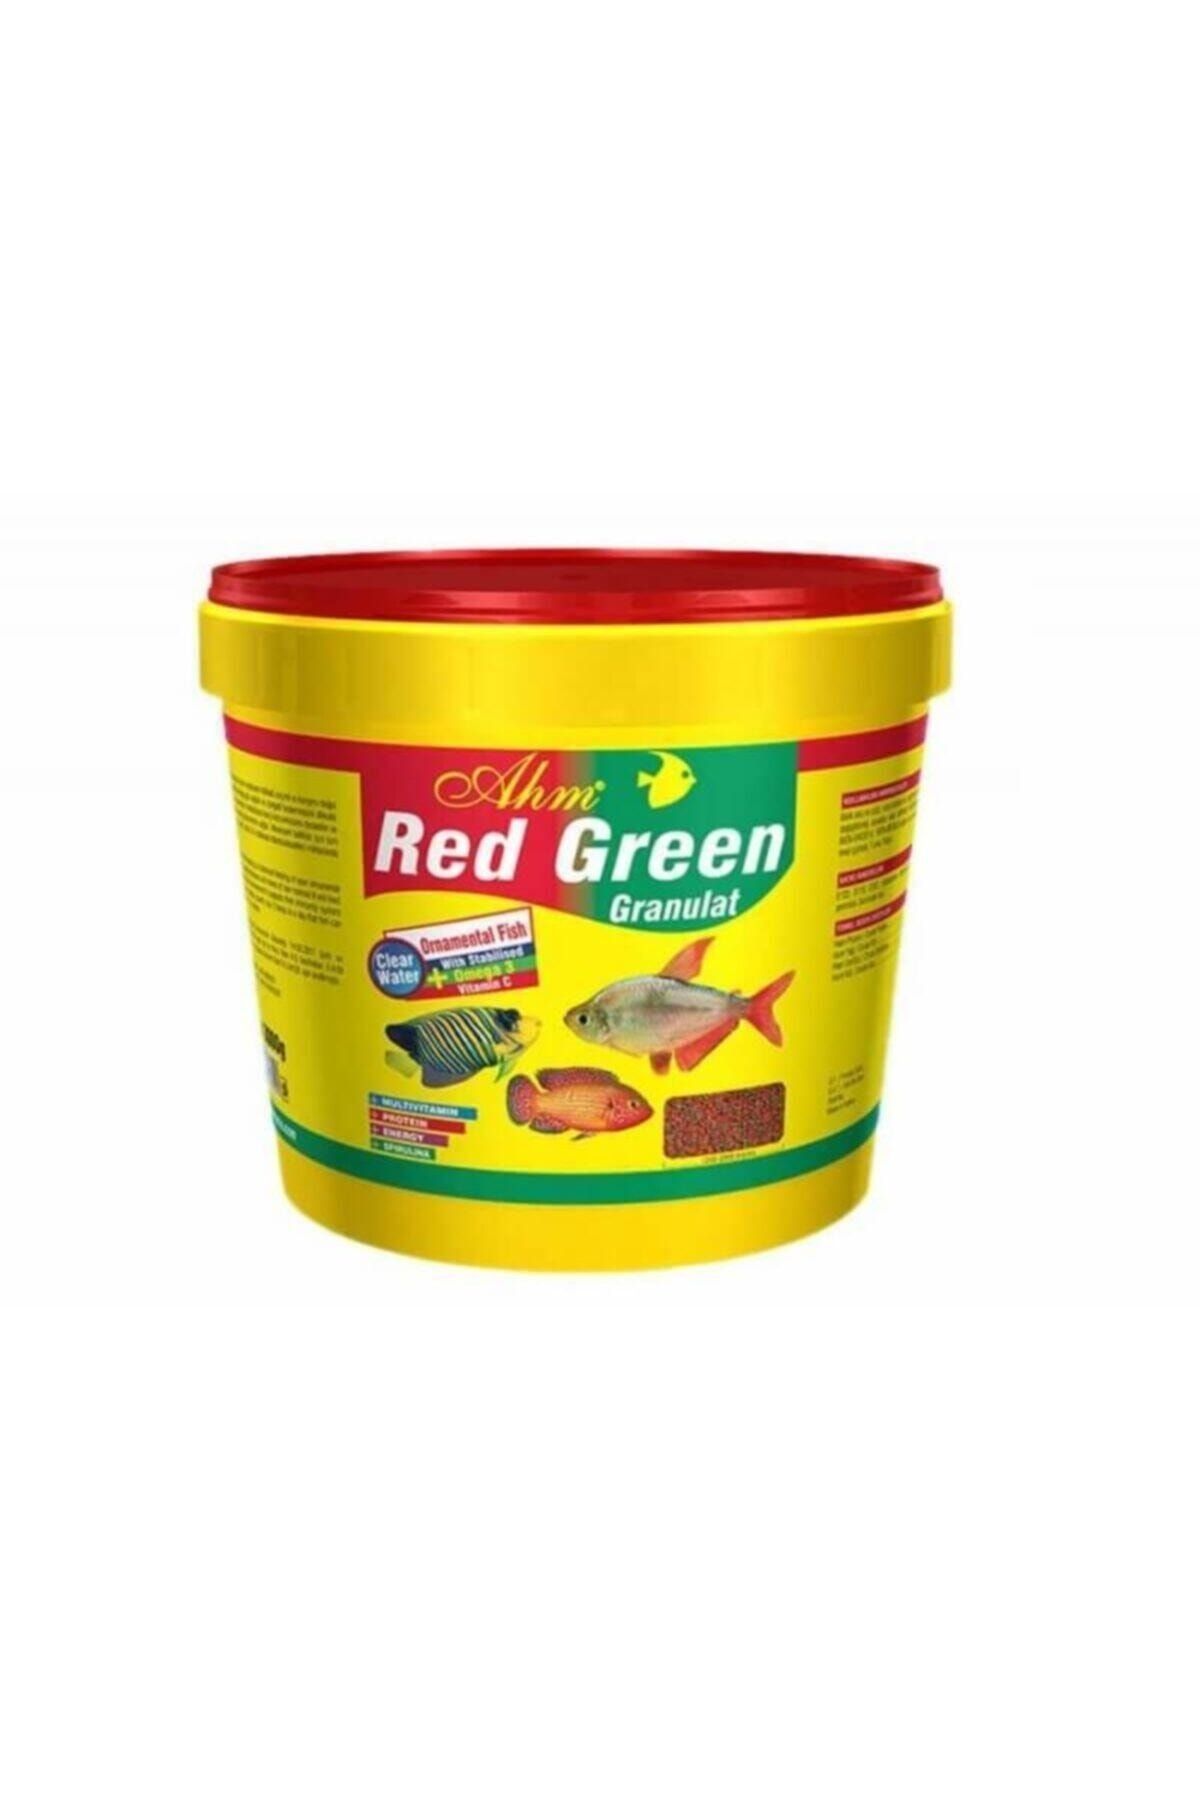 Ahm Red Green Karışık Granulat Ciklet Balığı Yemi 10l 3kg